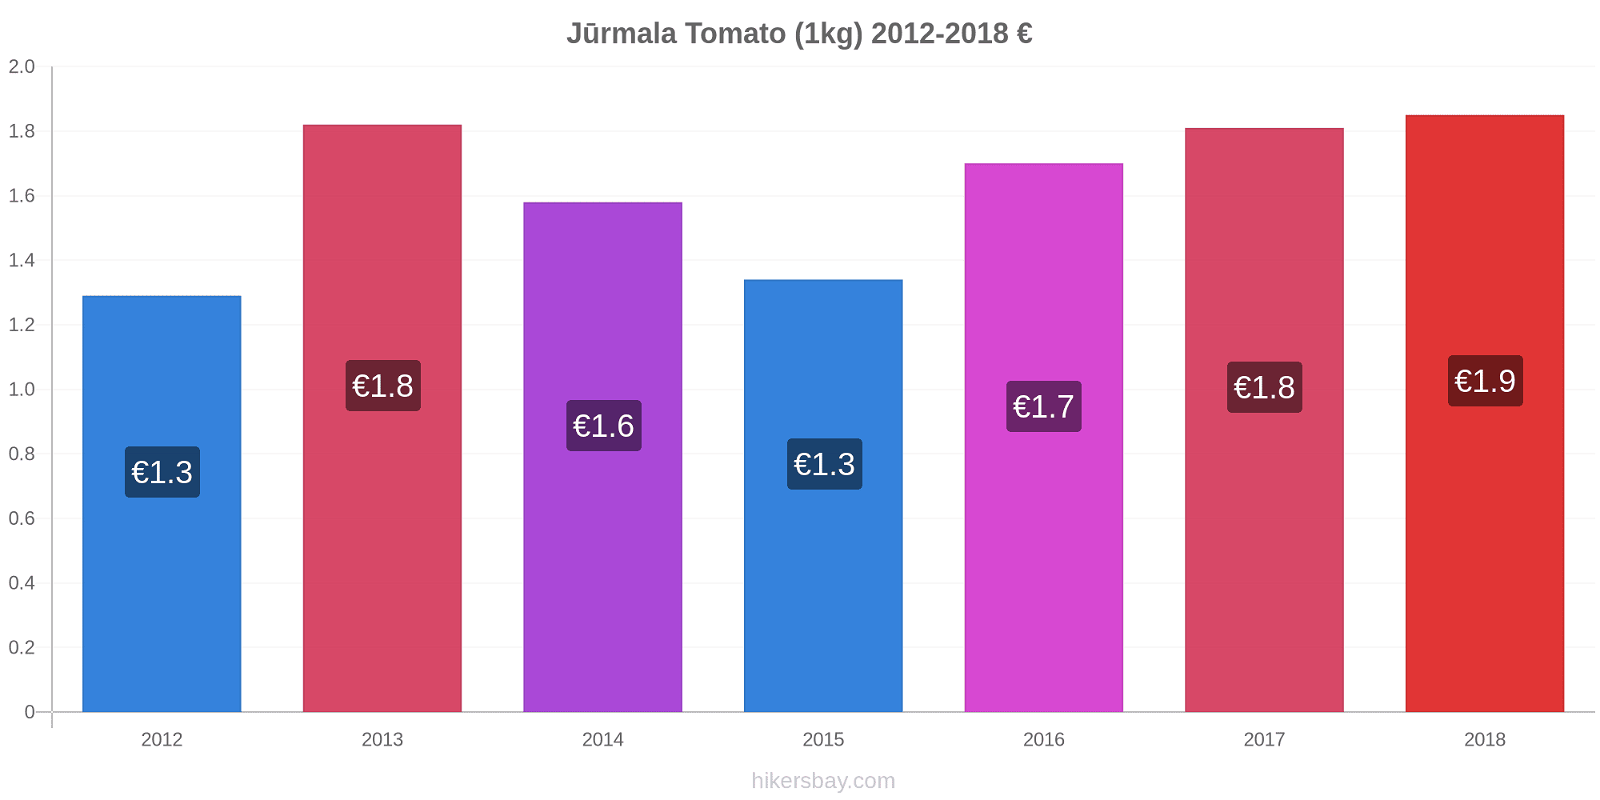 Jūrmala price changes Tomato (1kg) hikersbay.com